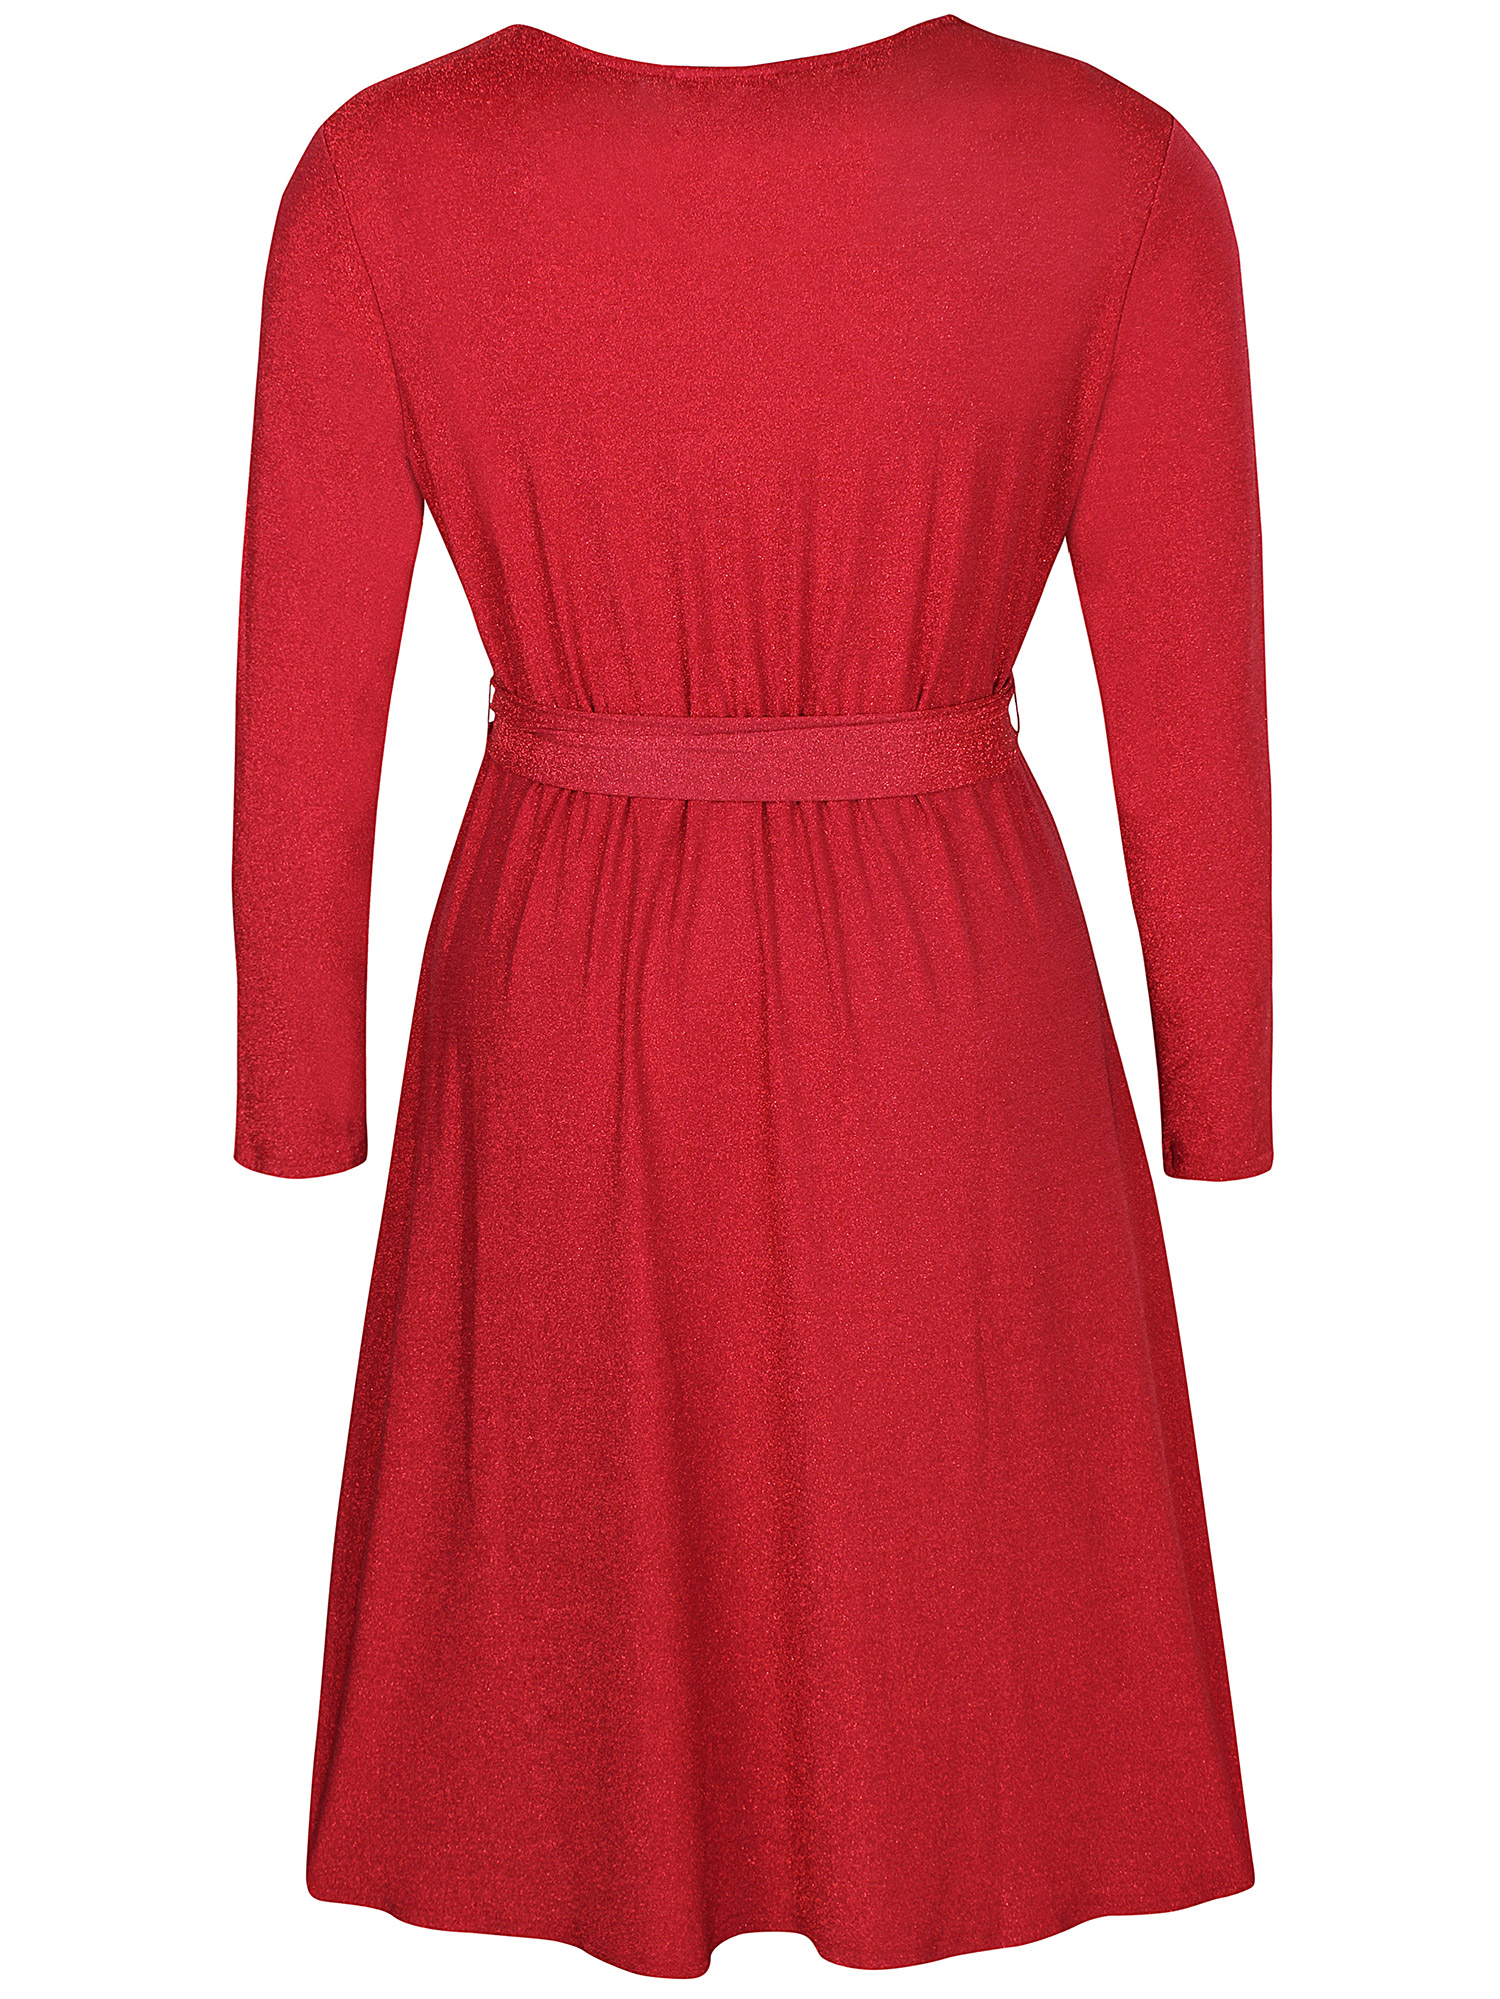 JAYLEE - Rød glimmer kjole fra Zhenzi